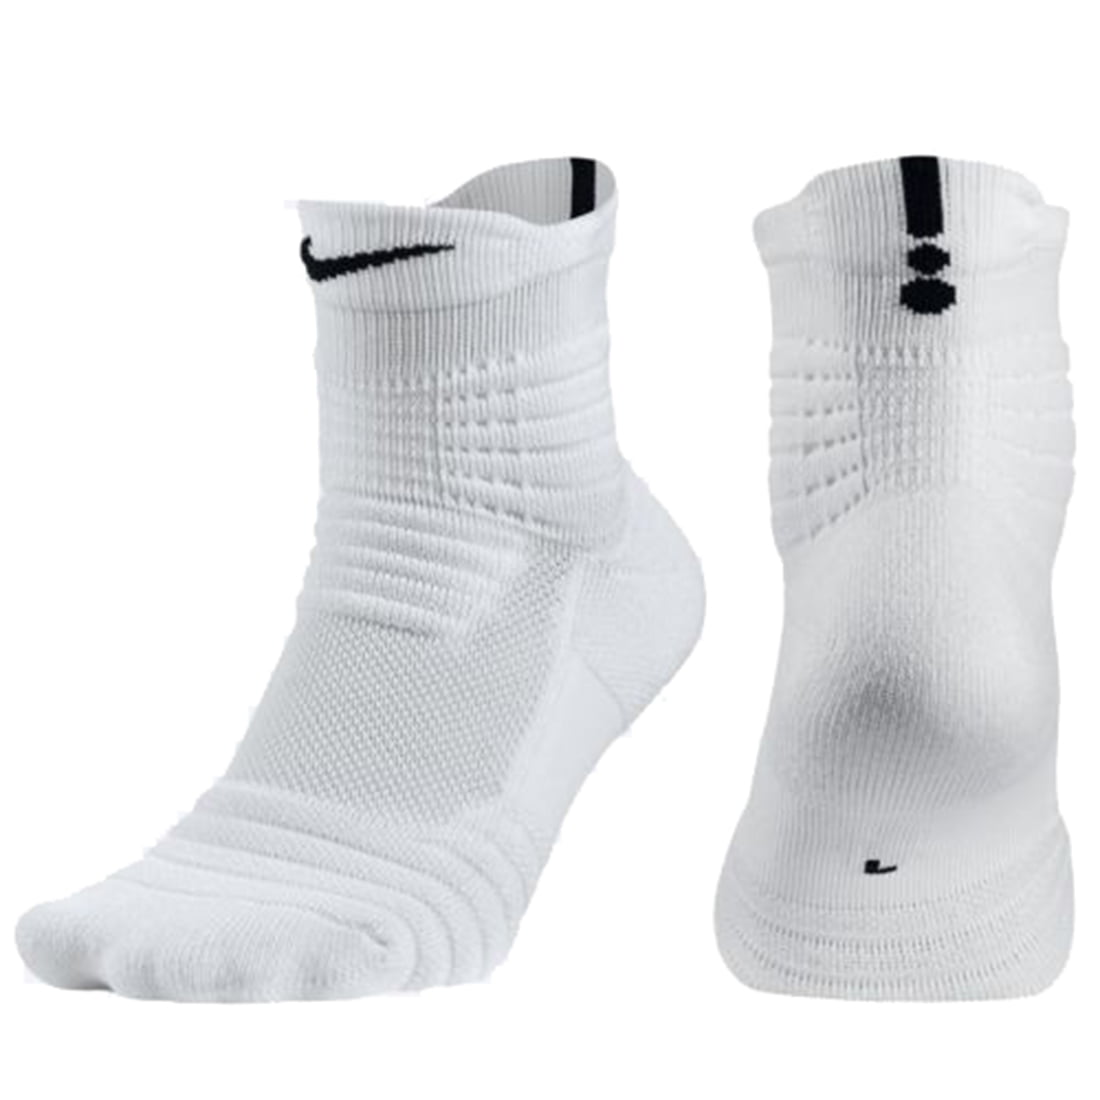 Nike Elite Versatility Mid Quarter Athletic Socks, White/Black, Small - Walmart.com